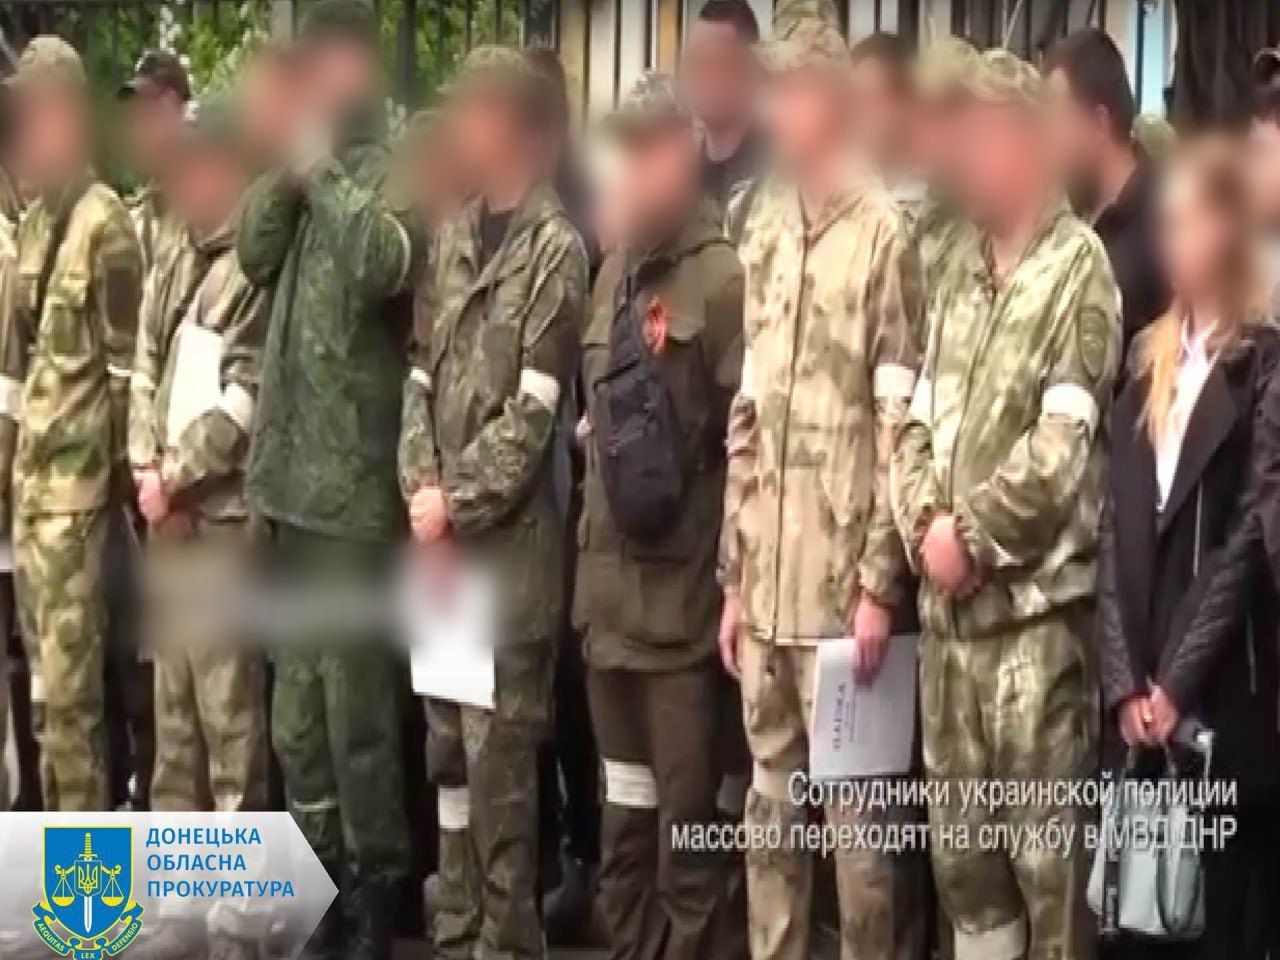 Майже 20 українських поліцейських перейшли на службу в &quot;ДНР&quot;. Їм загрожує довічне